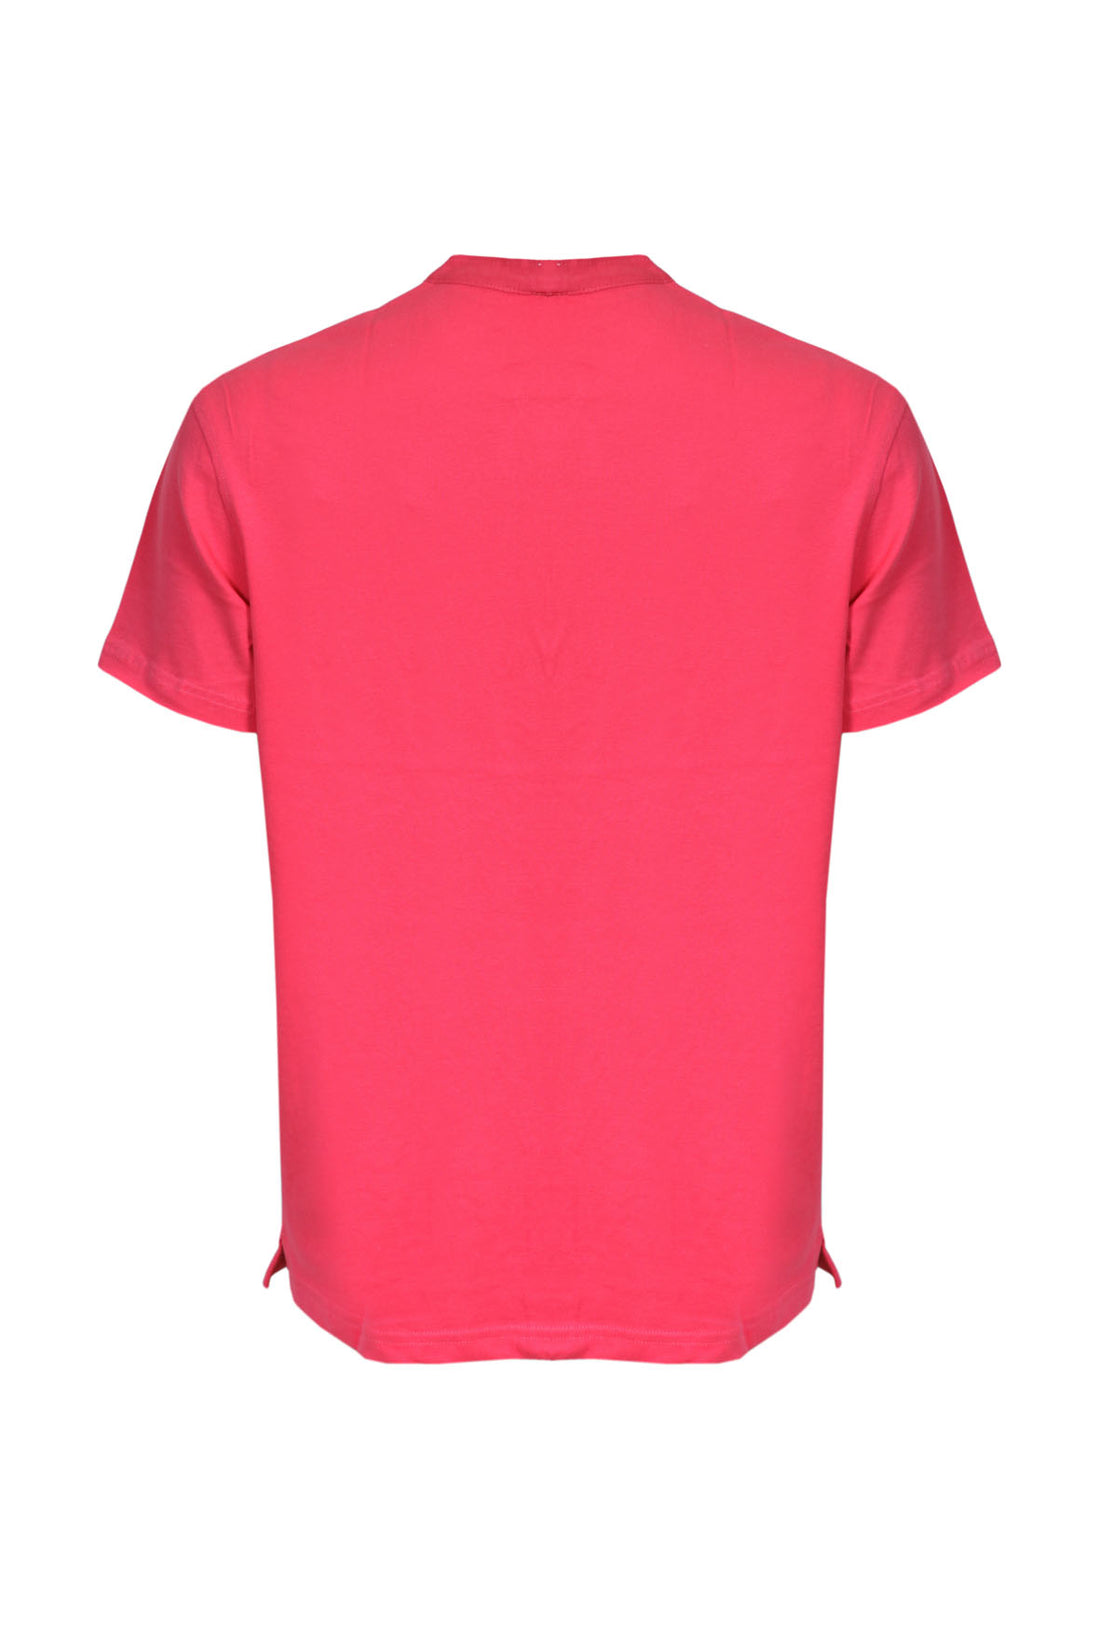 Serafino Half Sleeve Cotton T-Shirt - Coral